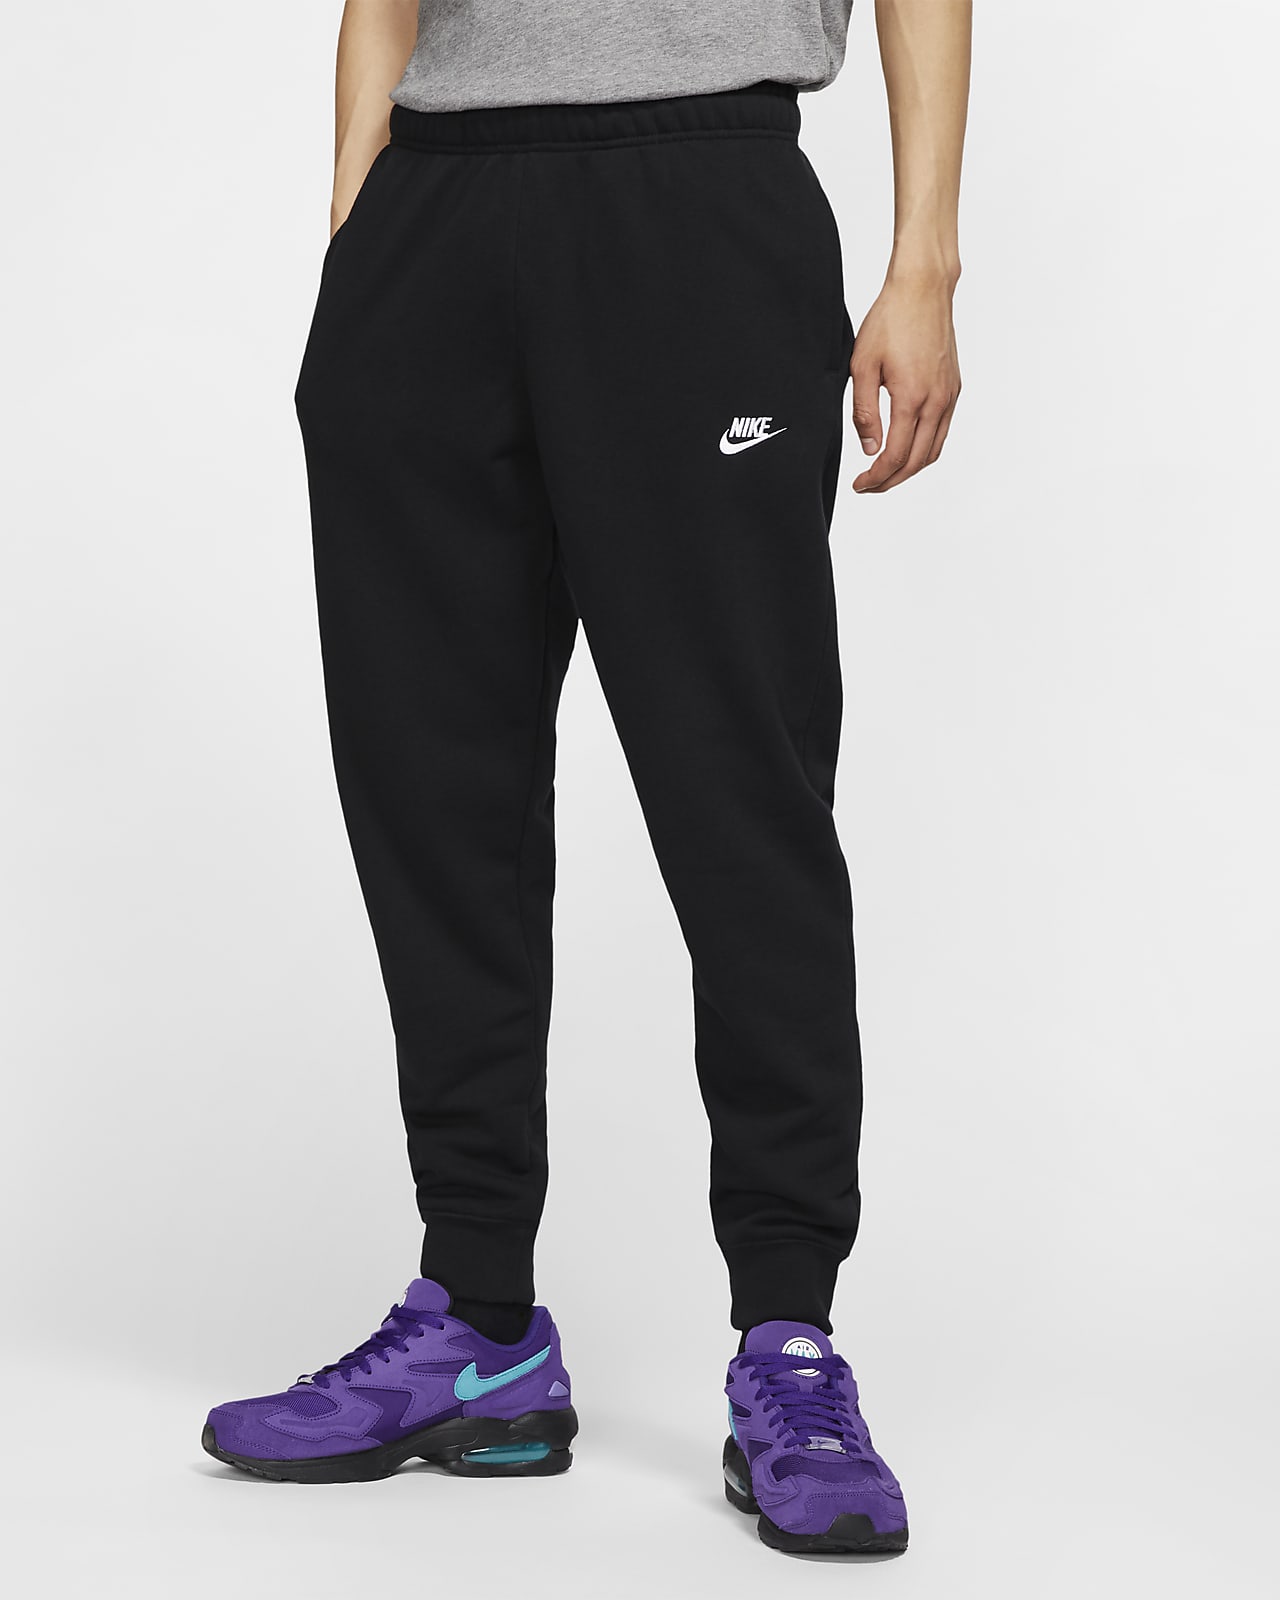 Nike Sportswear Club Joggingbroek voor heren